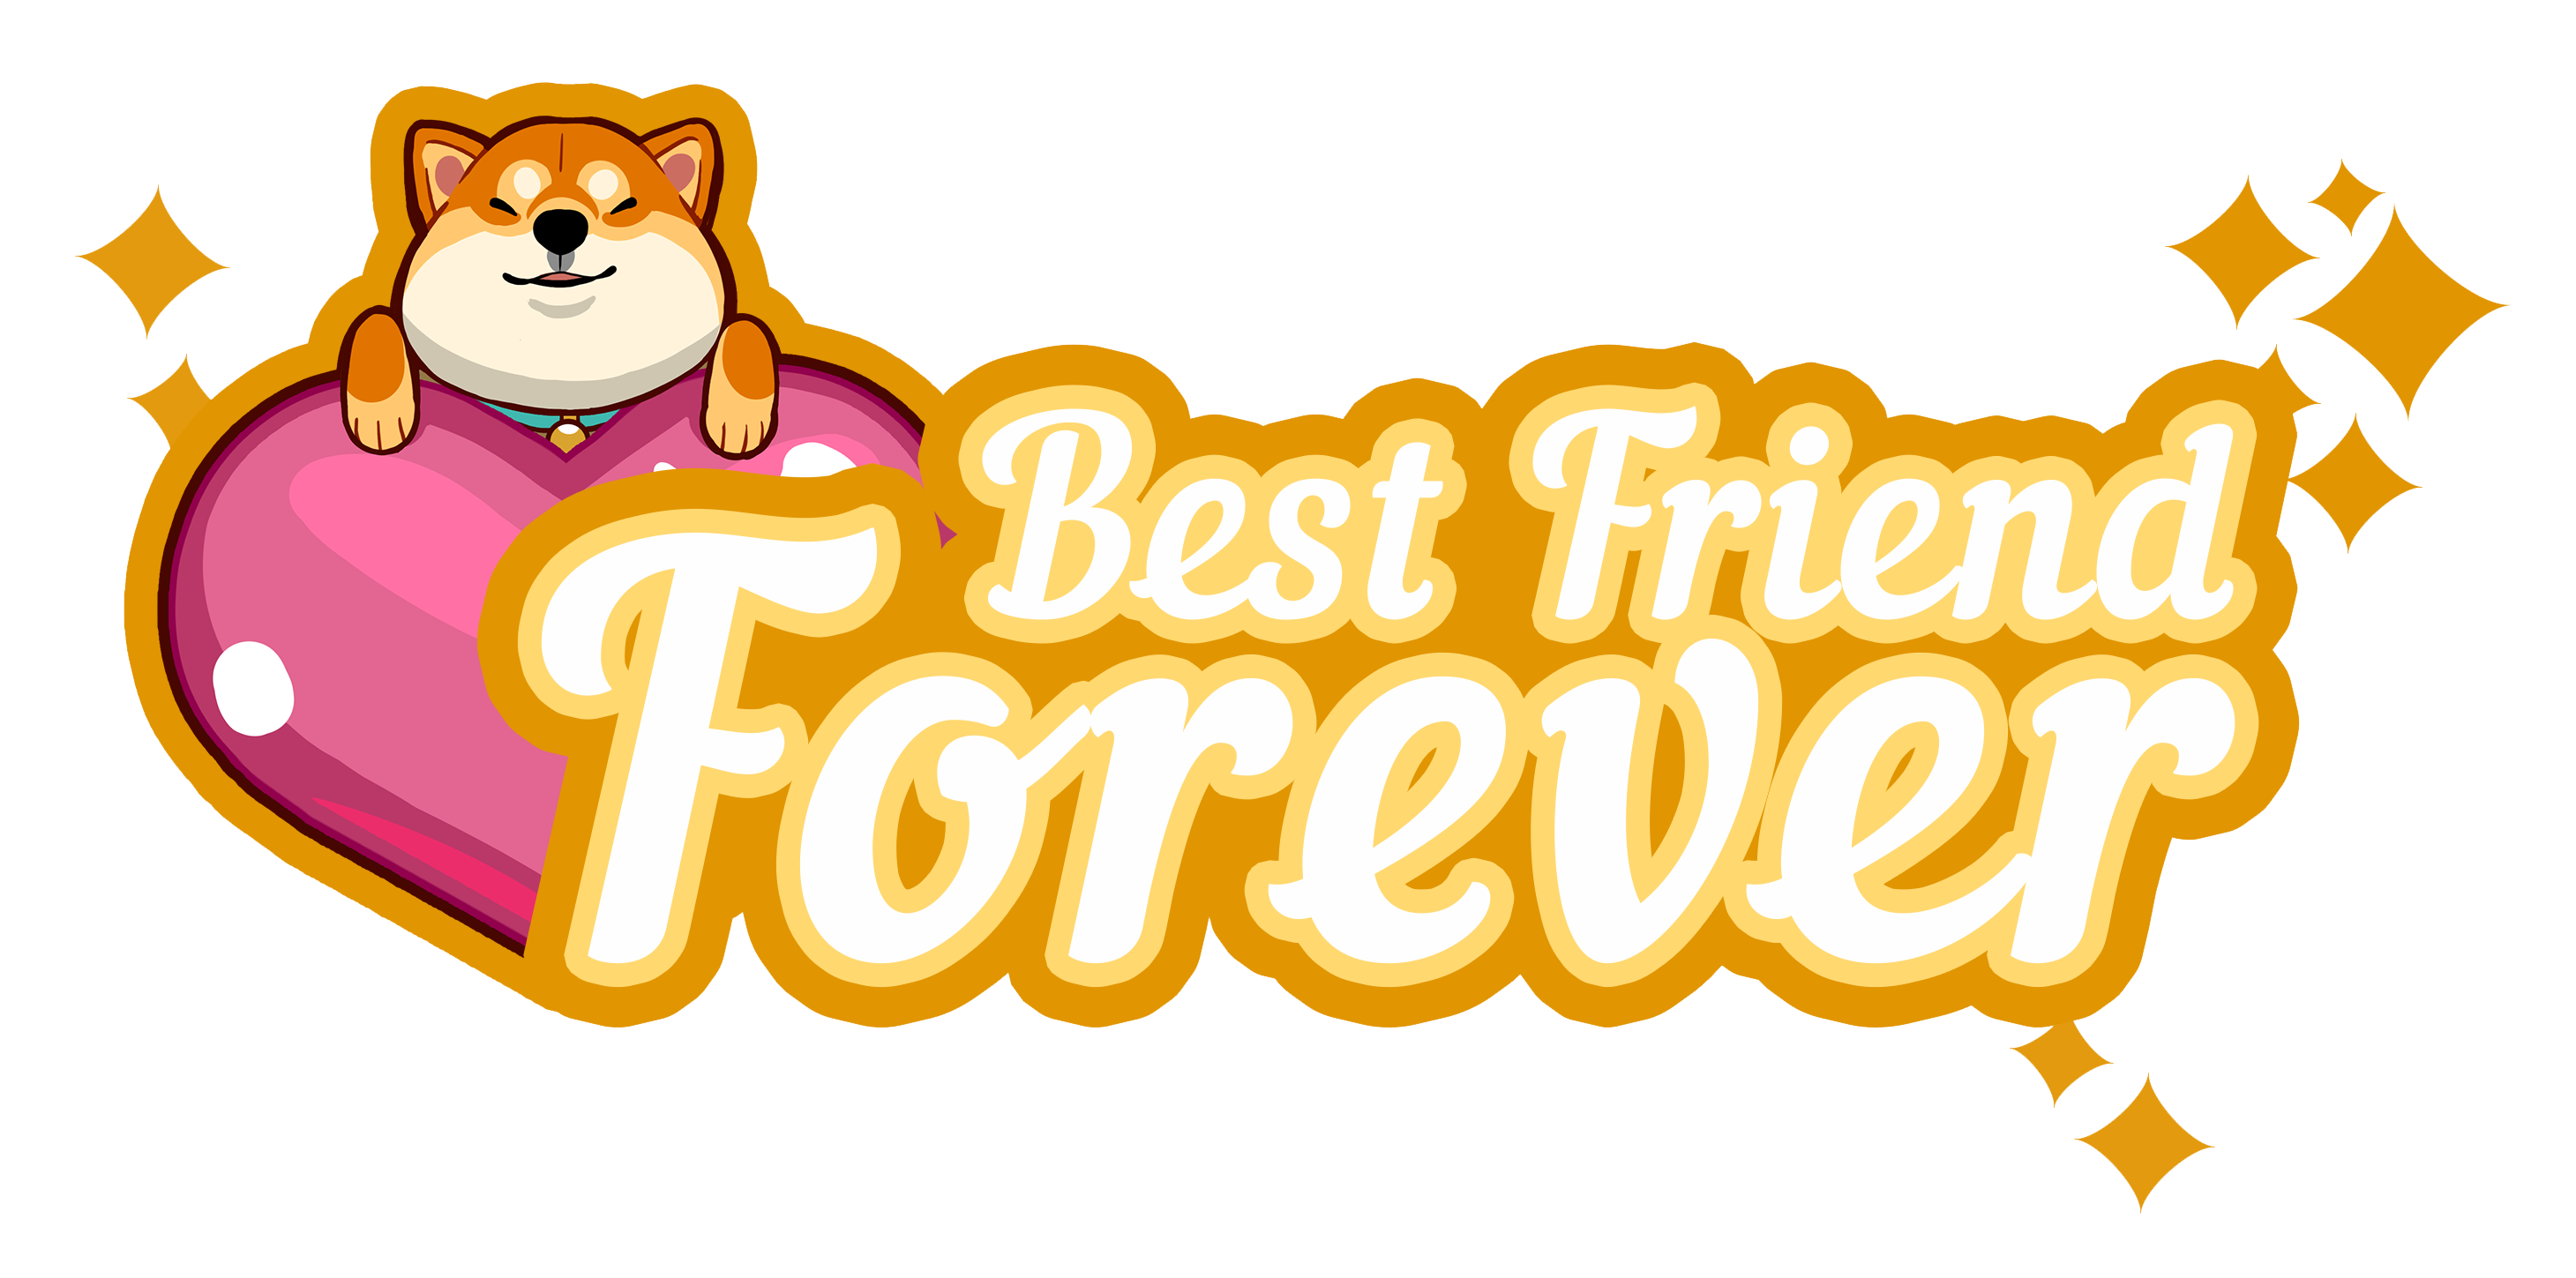 Friends detailing. Best friends надпись. Best friends Forever надпись. Best friends на прозрачном фоне. Логотип френдс.